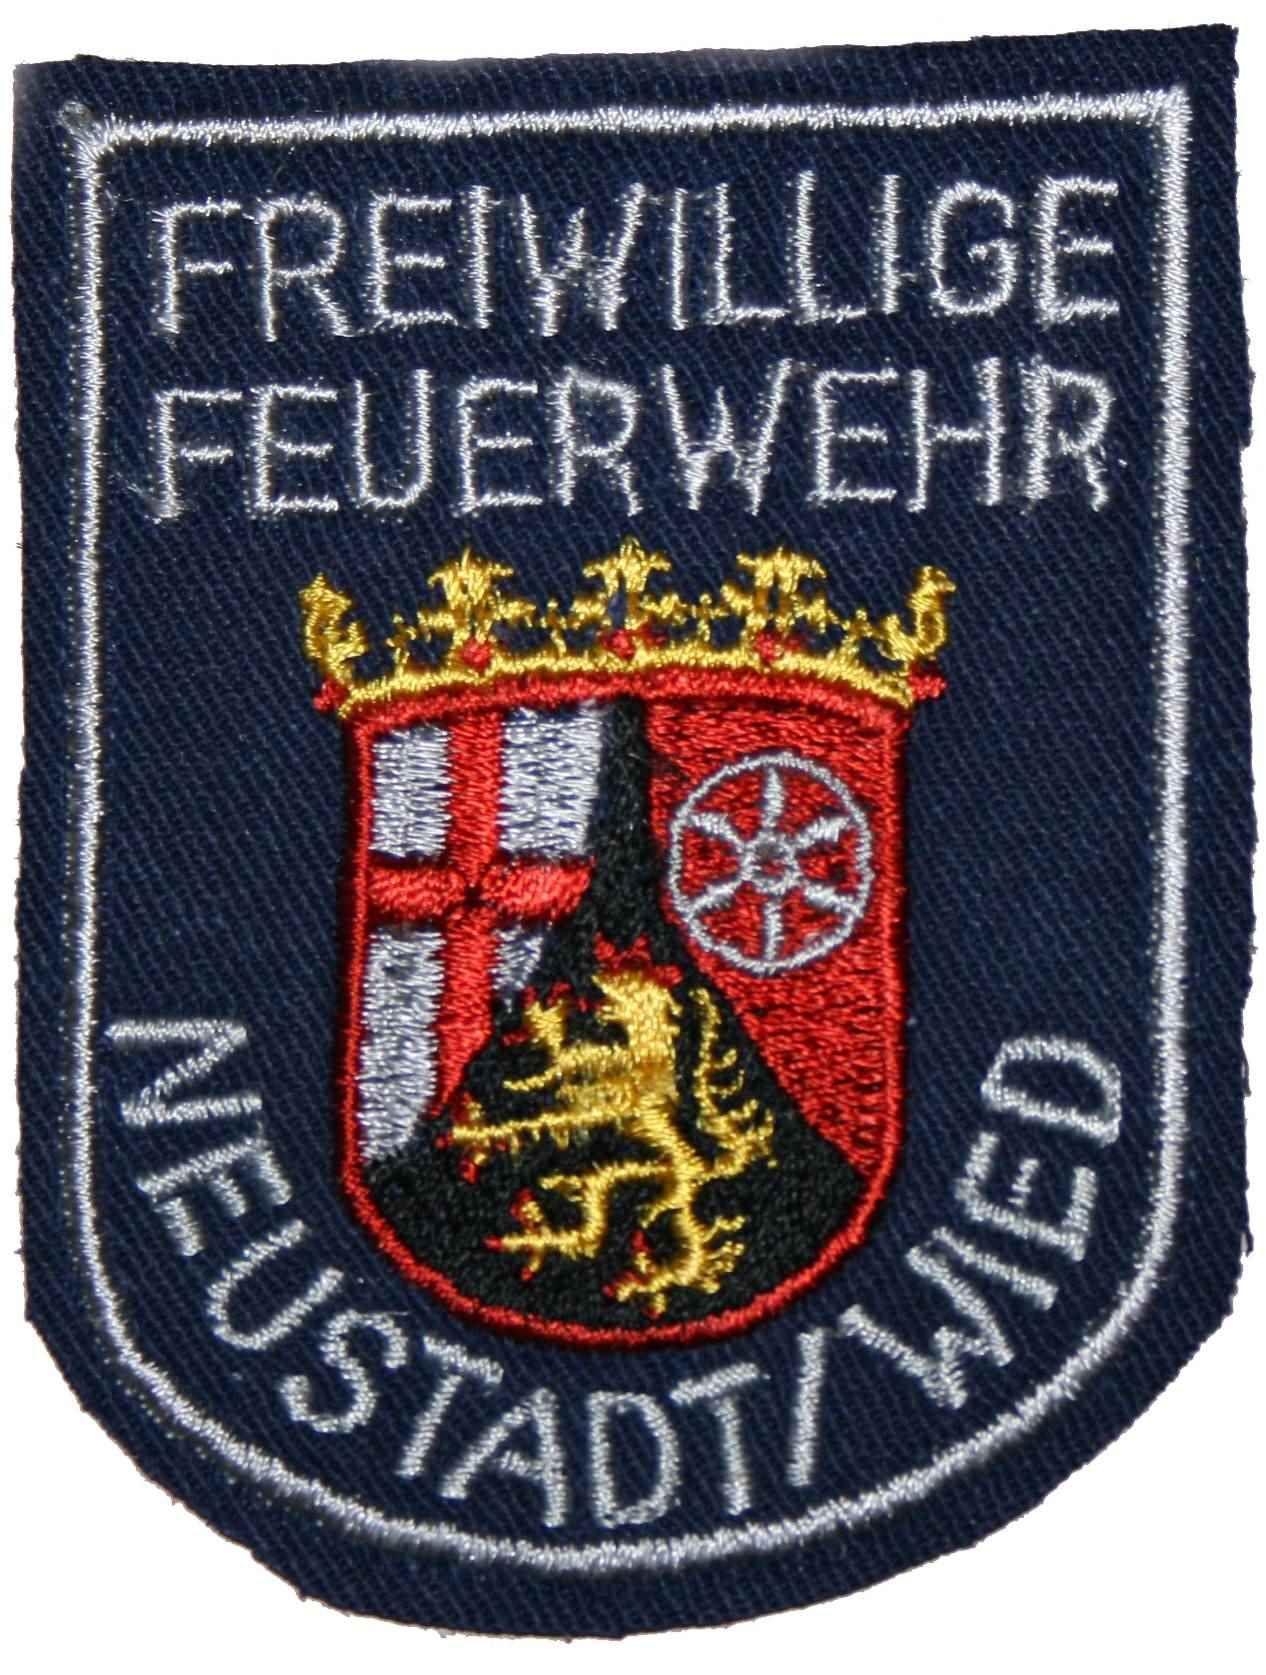 Neustadt Wied